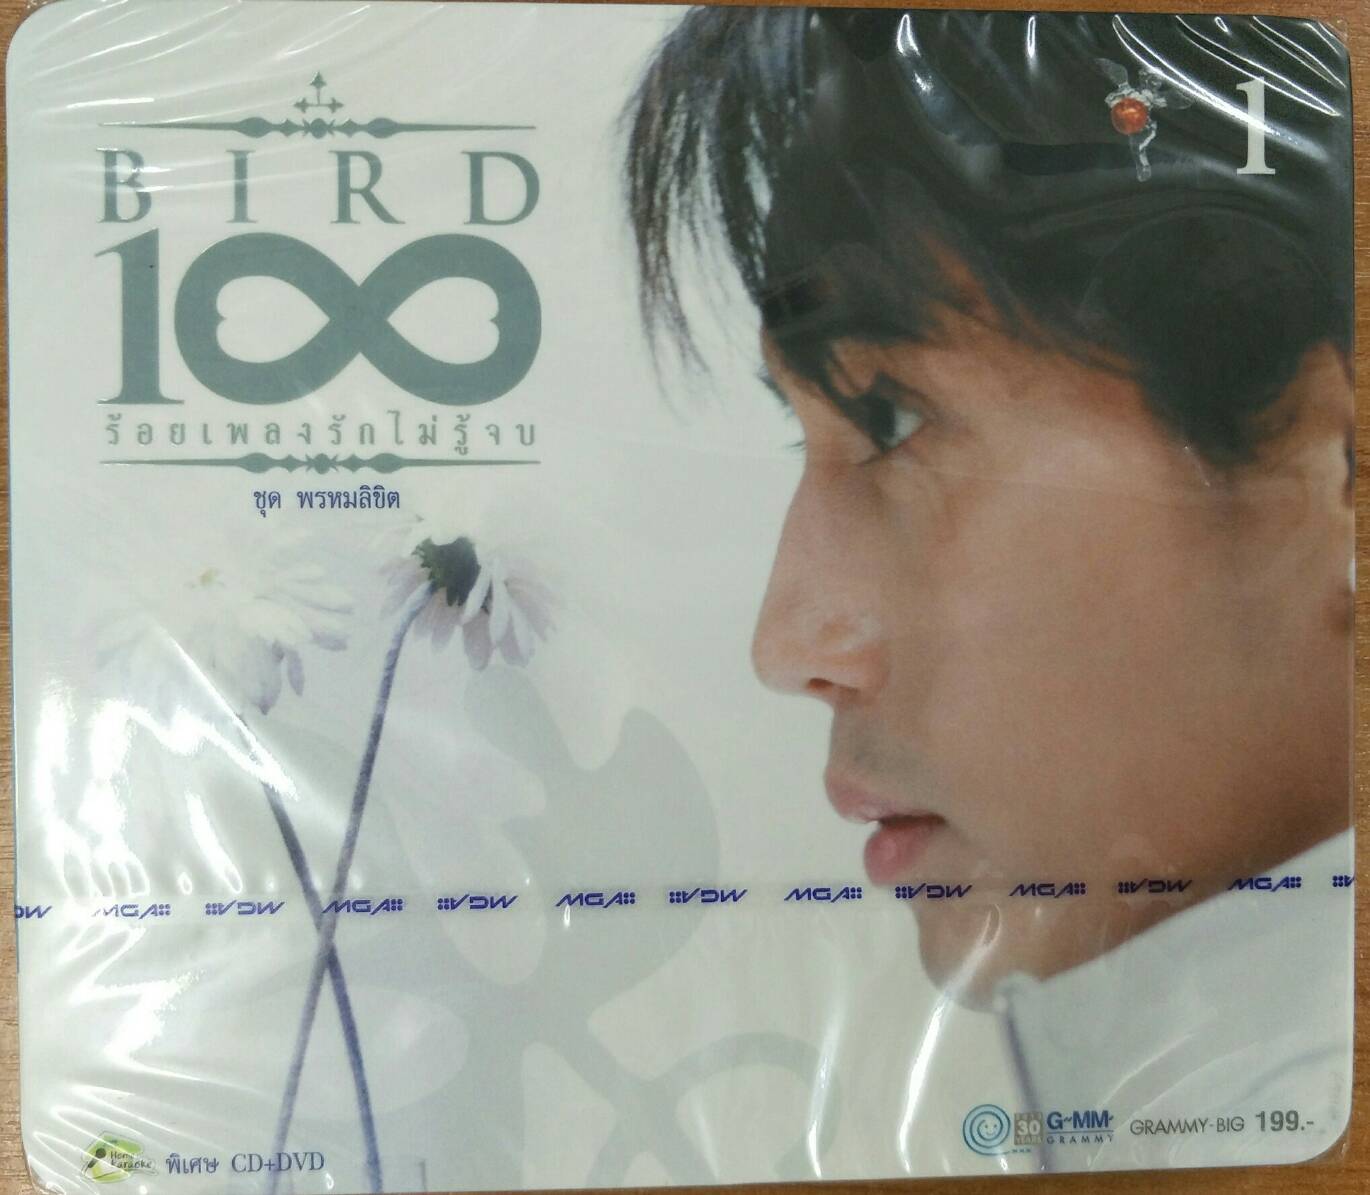 CD+DVD เบิร์ด BIRD 100 เพลงรักไม่รู้จบ ชุดพรหมลิขิต Vol.1 (GMMCDDVD199-เบิร์ด์ 100ชุดพรหมลิขิตVol1) GG-0556149 พรหมลิขิต รักไม่รู้ดับ ทะเลไม่เคยหลับ เพลง เพลงไทย เบิร์ด ธงไชย แกรมมี่ ซีดี ดีวดี STARMART